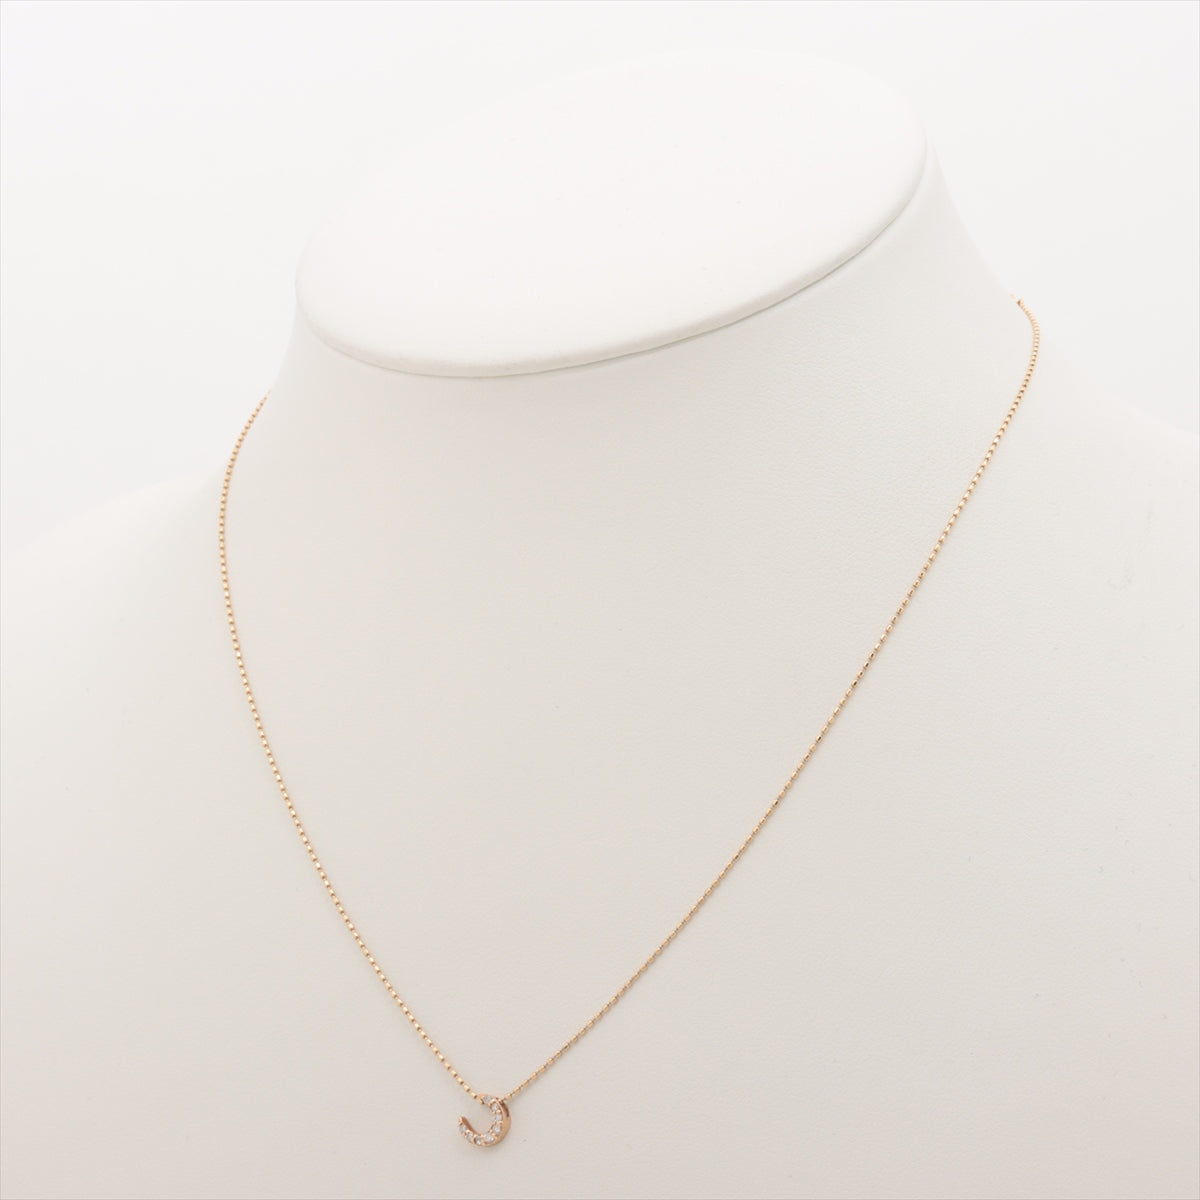 Agat diamond necklace K10 (YG) 1.2g 0.033 E